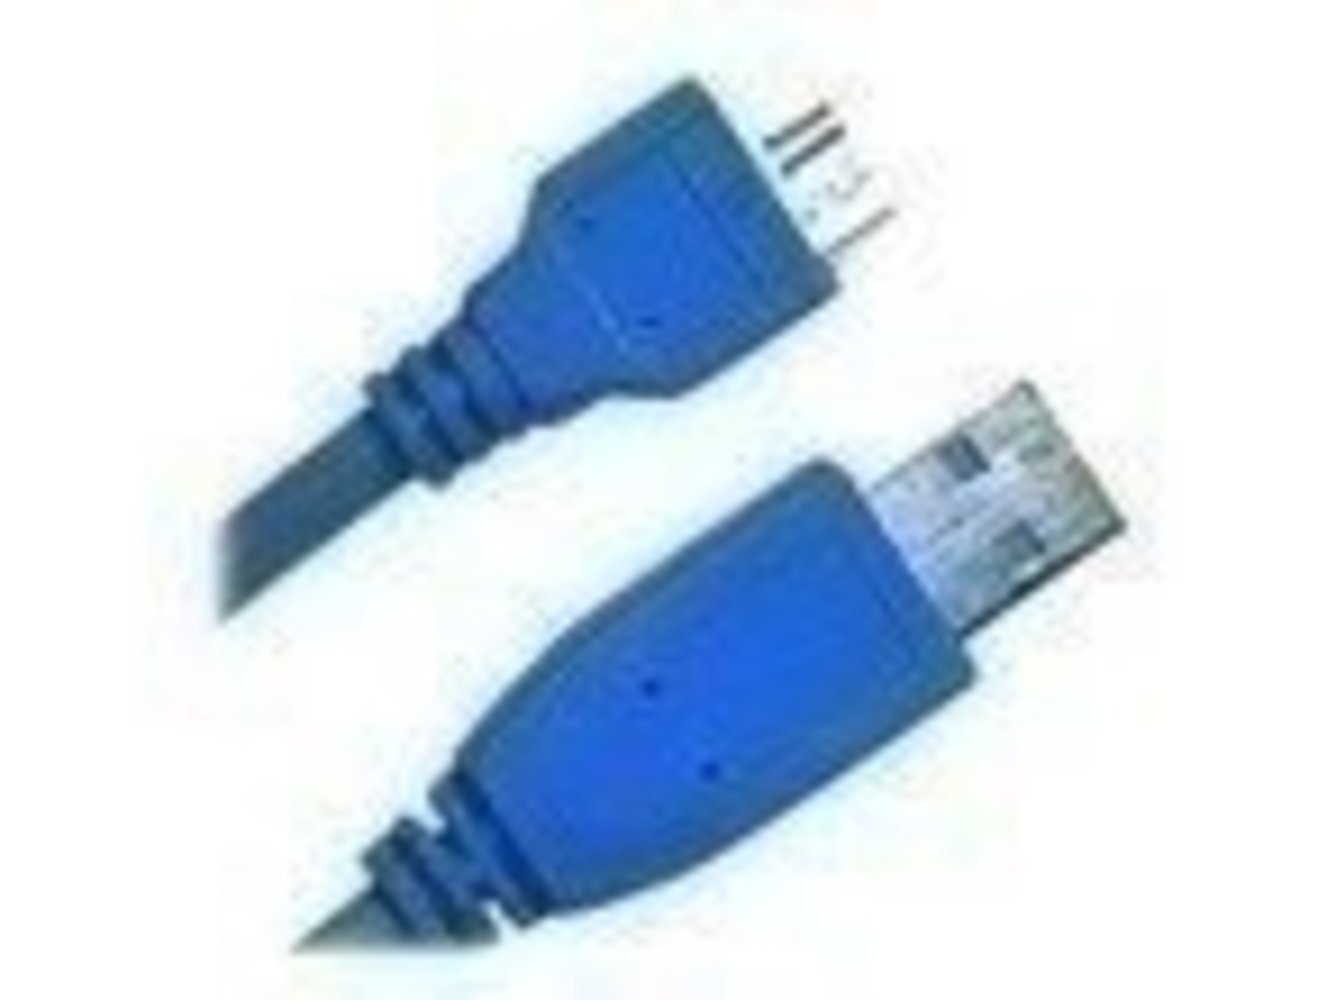  JOUJYE USB 3.0 Kabel Stecker A / Stecker Micro B 0.5m Super Speed doppelte Abschirmung blau